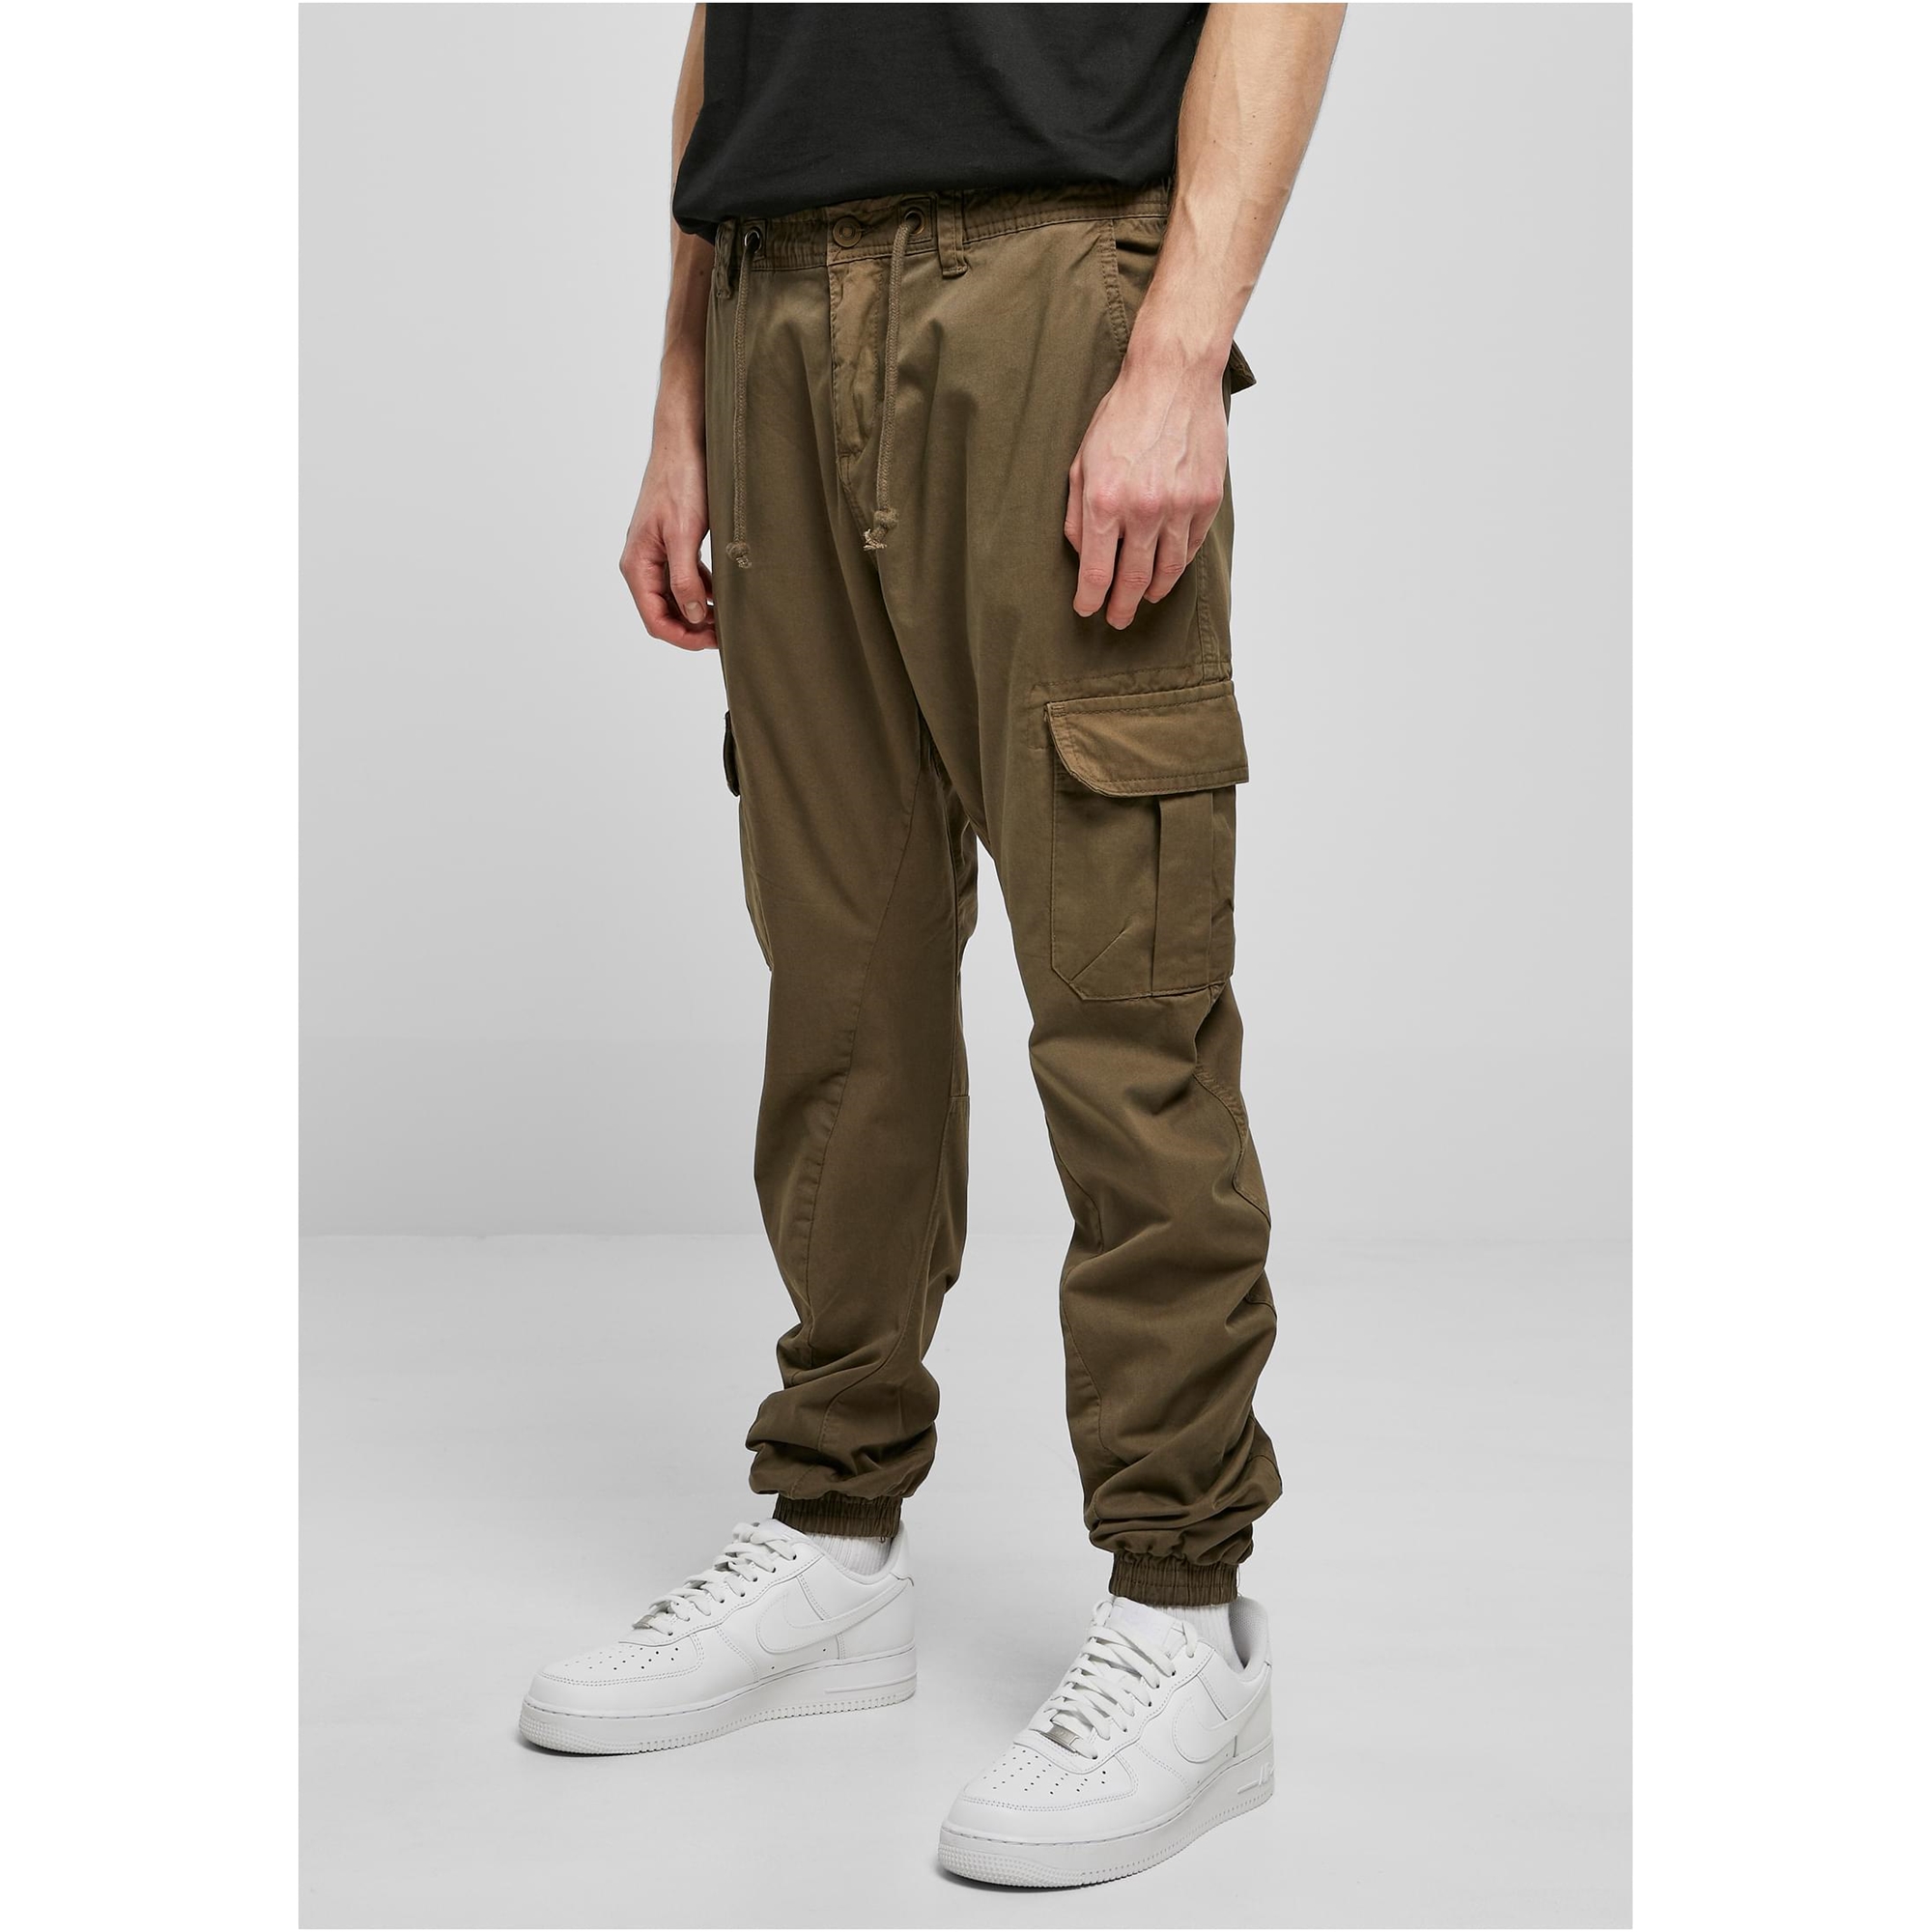 Urban Classics Herren eBay Jogginghose Hose Jeans | Cargohose Cargo Sweatpant Chino